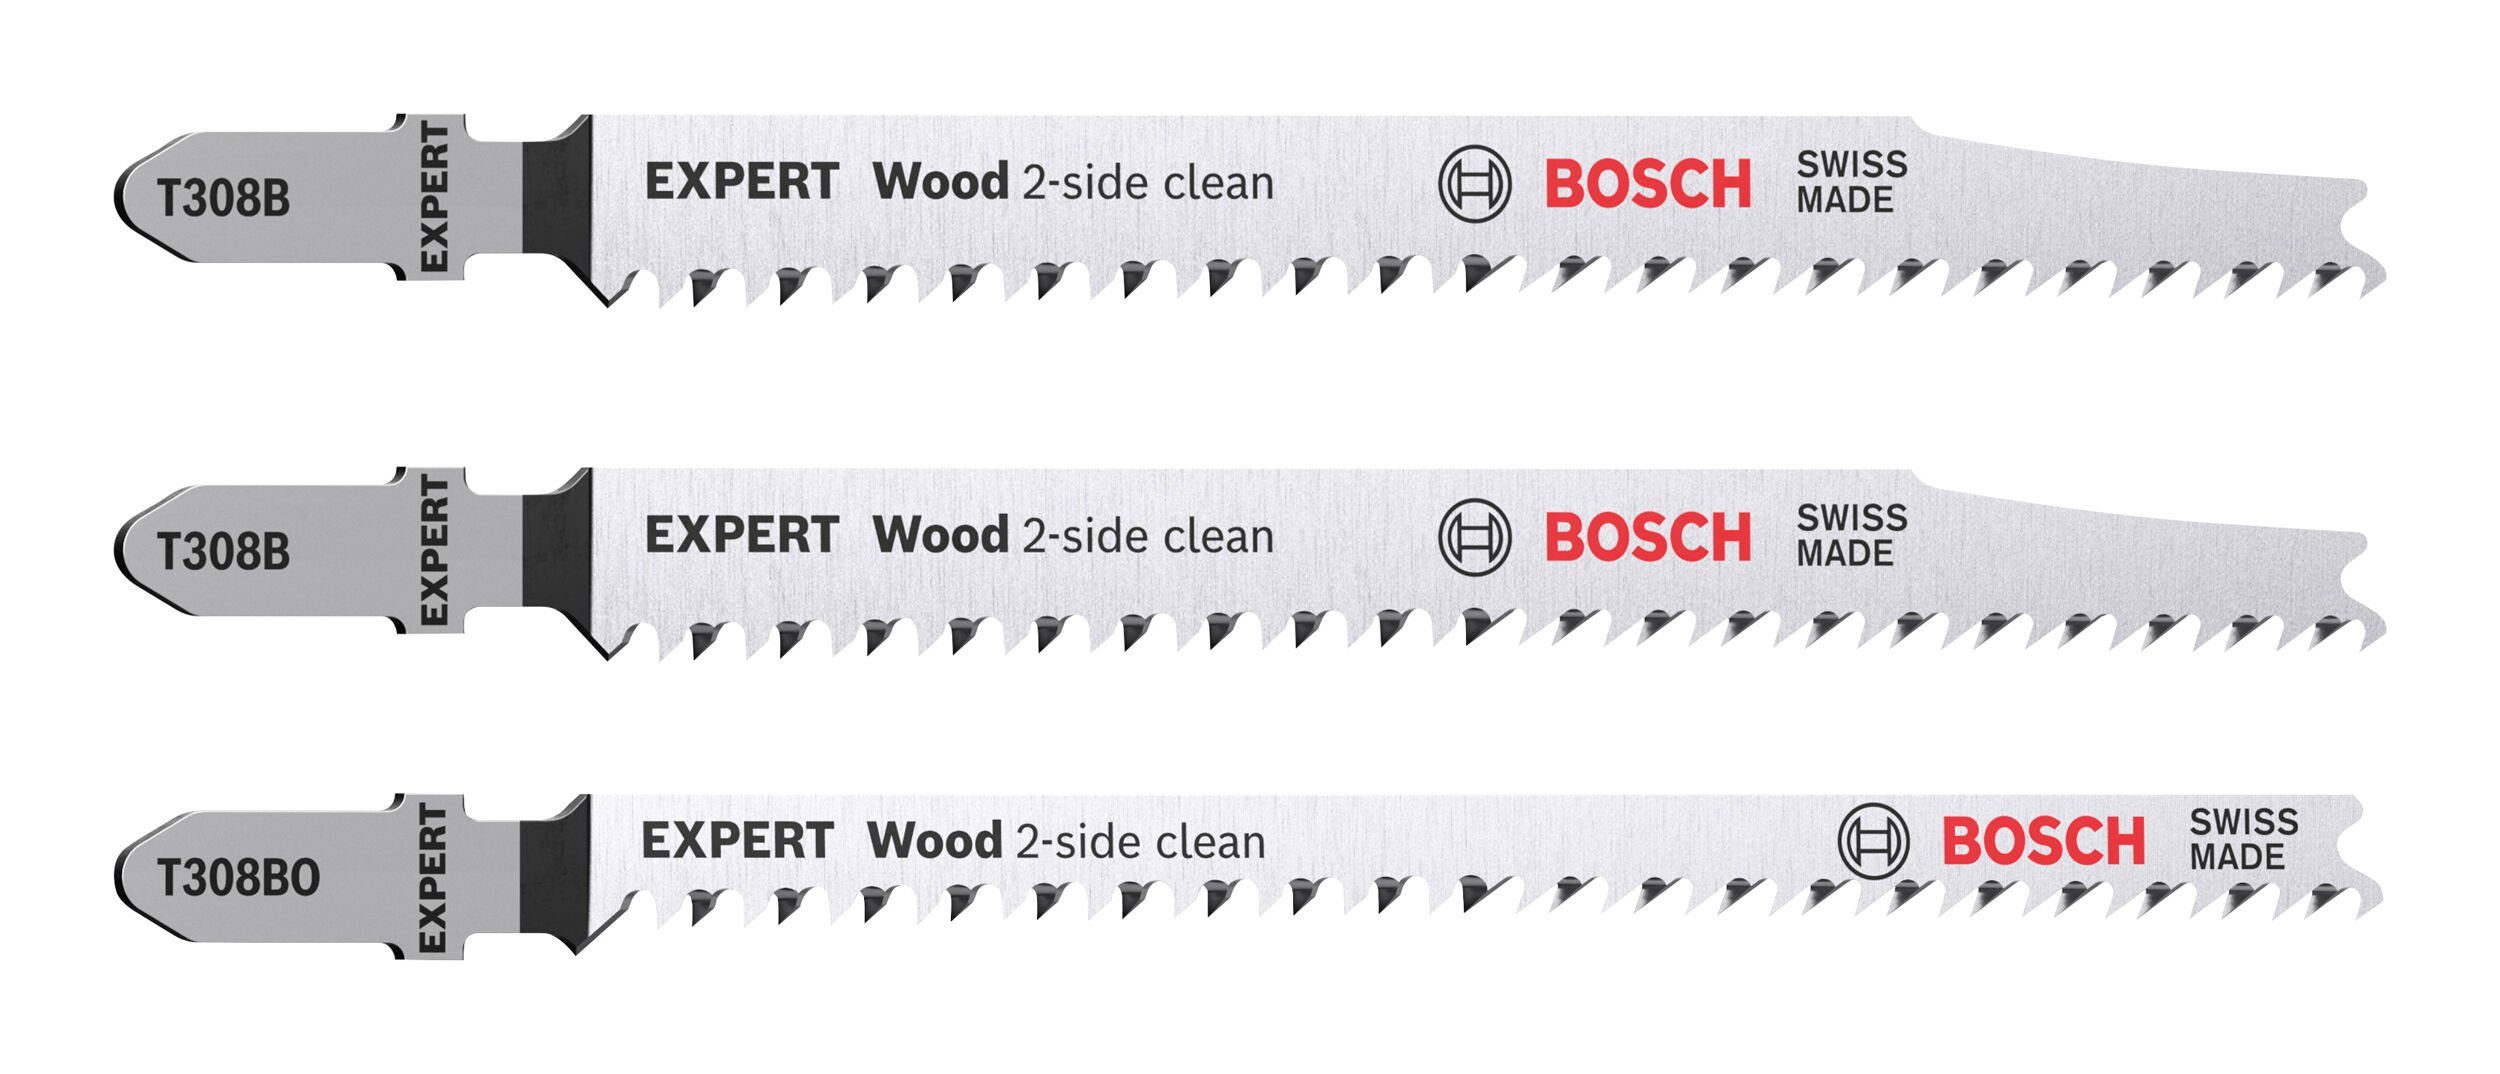 BOSCH Stichsägeblatt Expert Wood 2-side, Expert Extra-Clean for Wood Set - 3-teilig